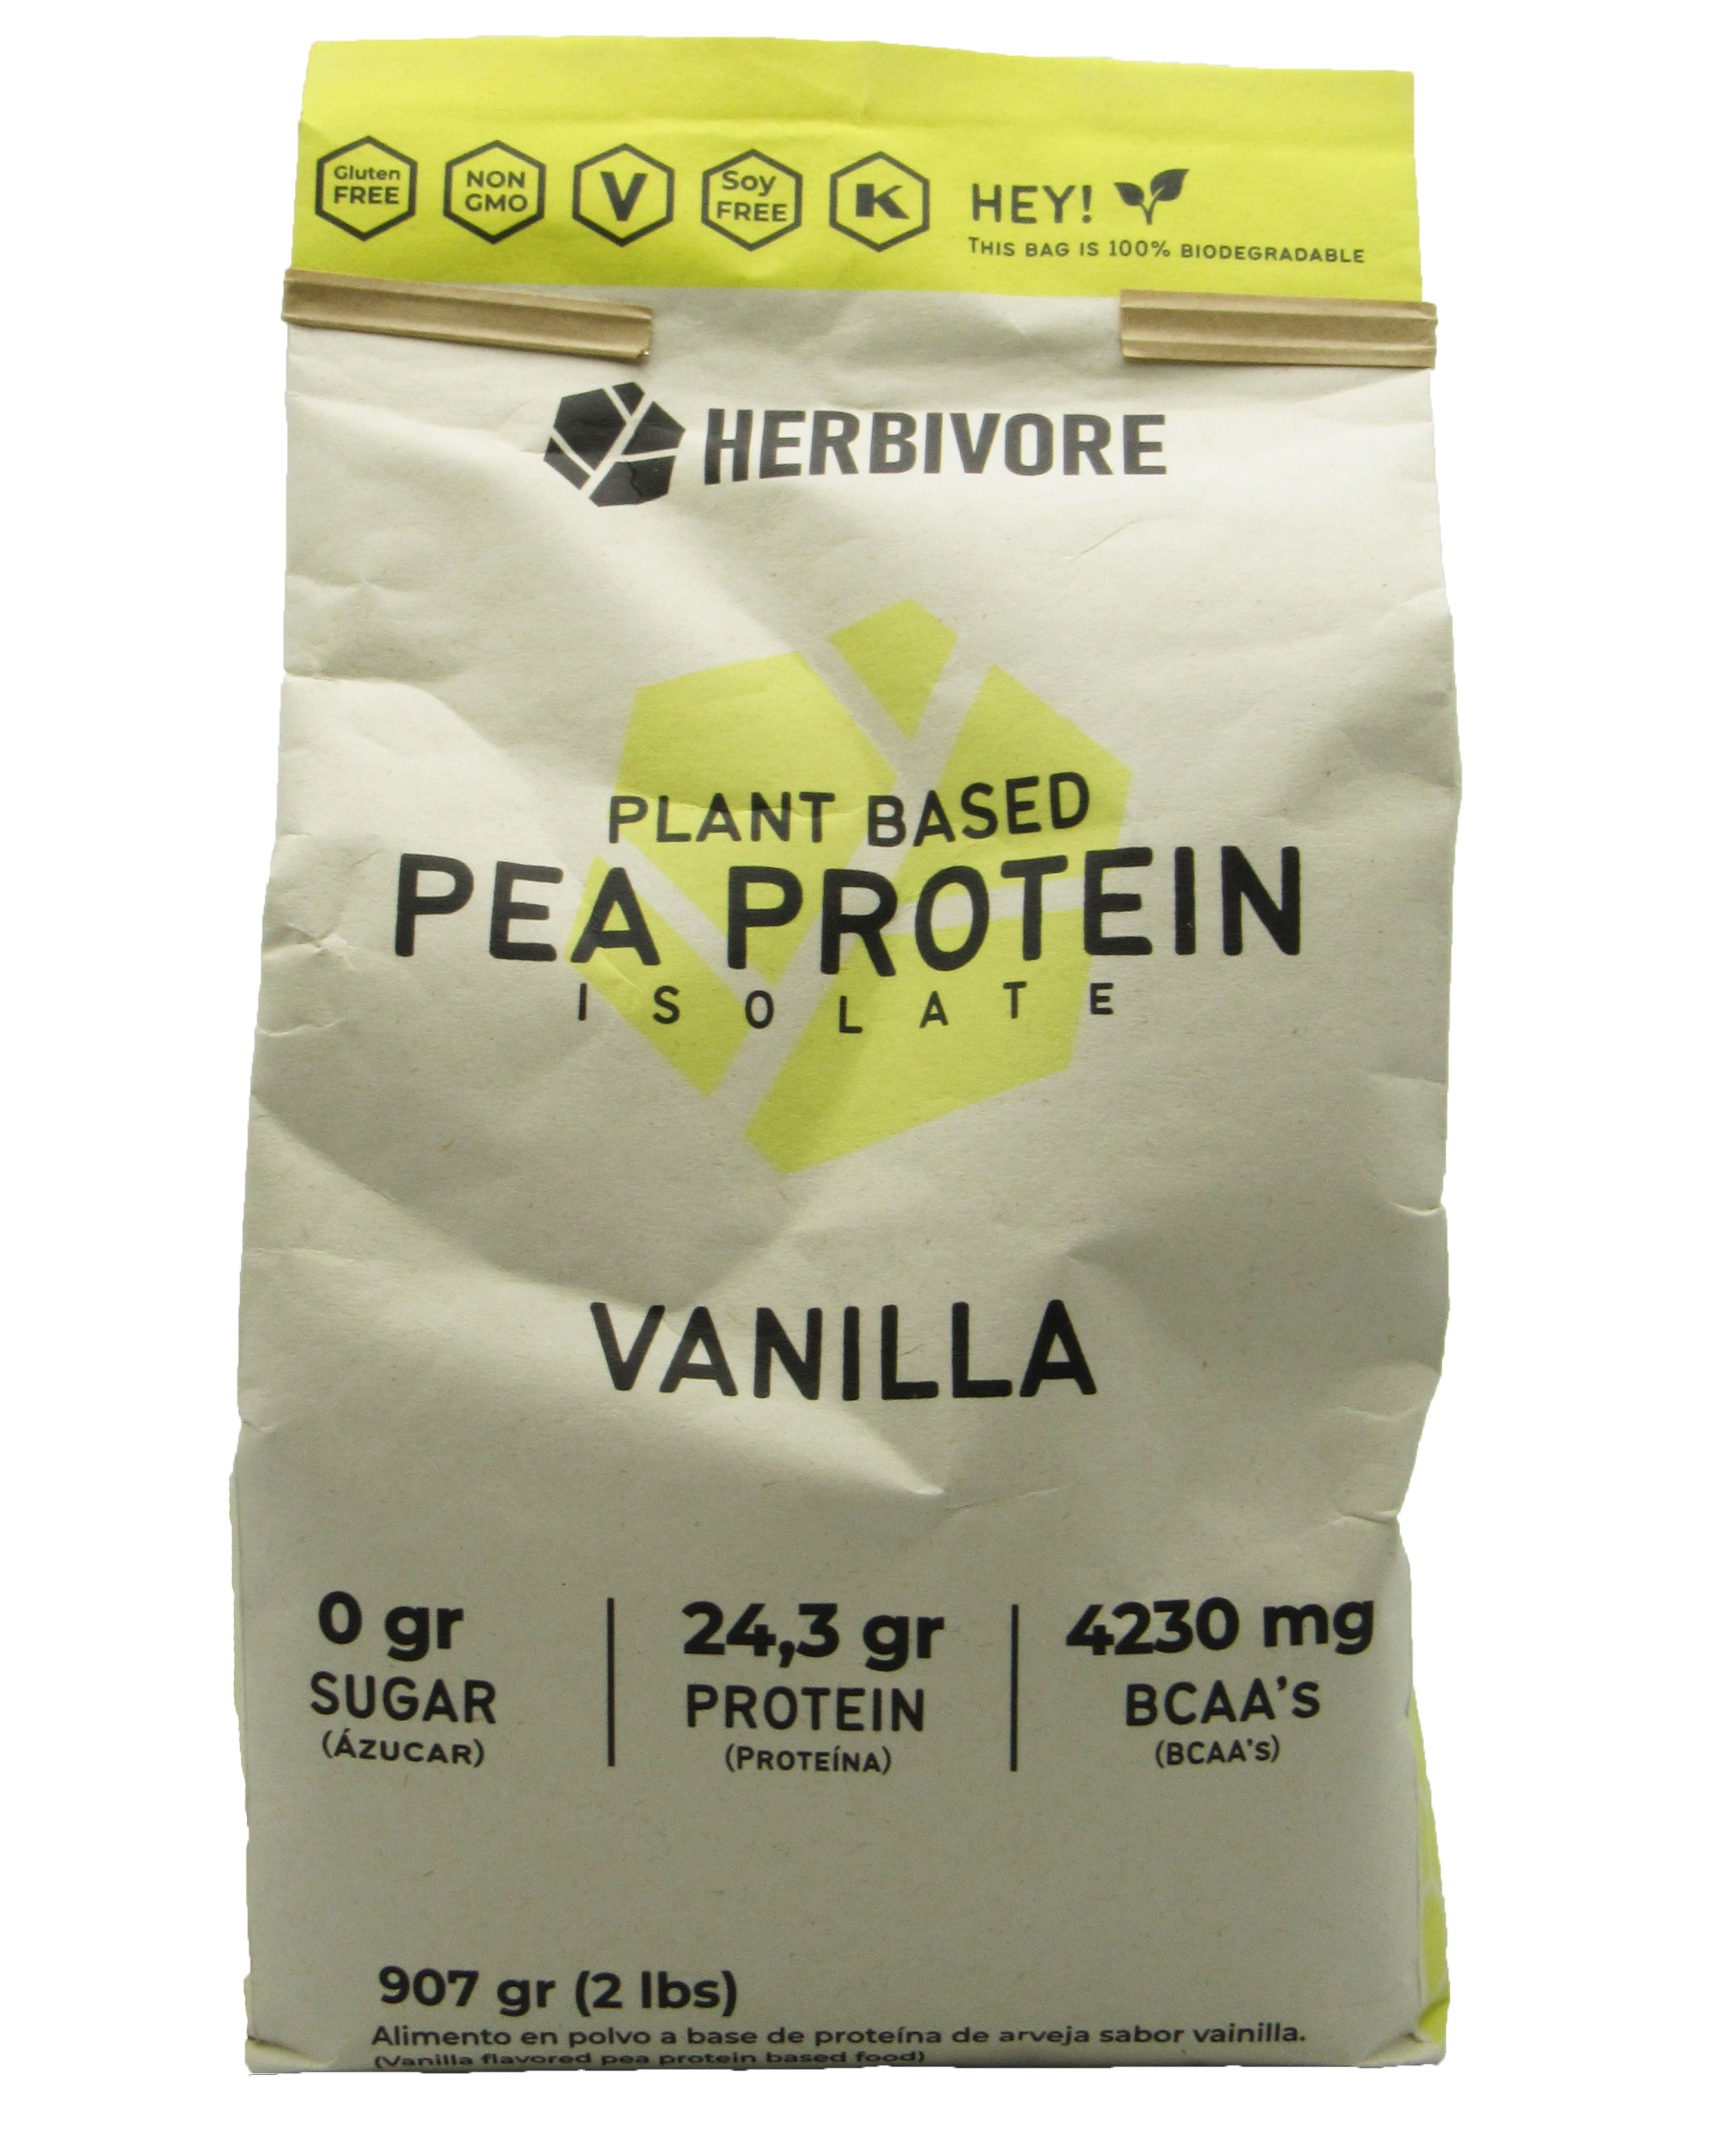 Pea Protein Isolate 907gr (HERBIVORE) Vainilla